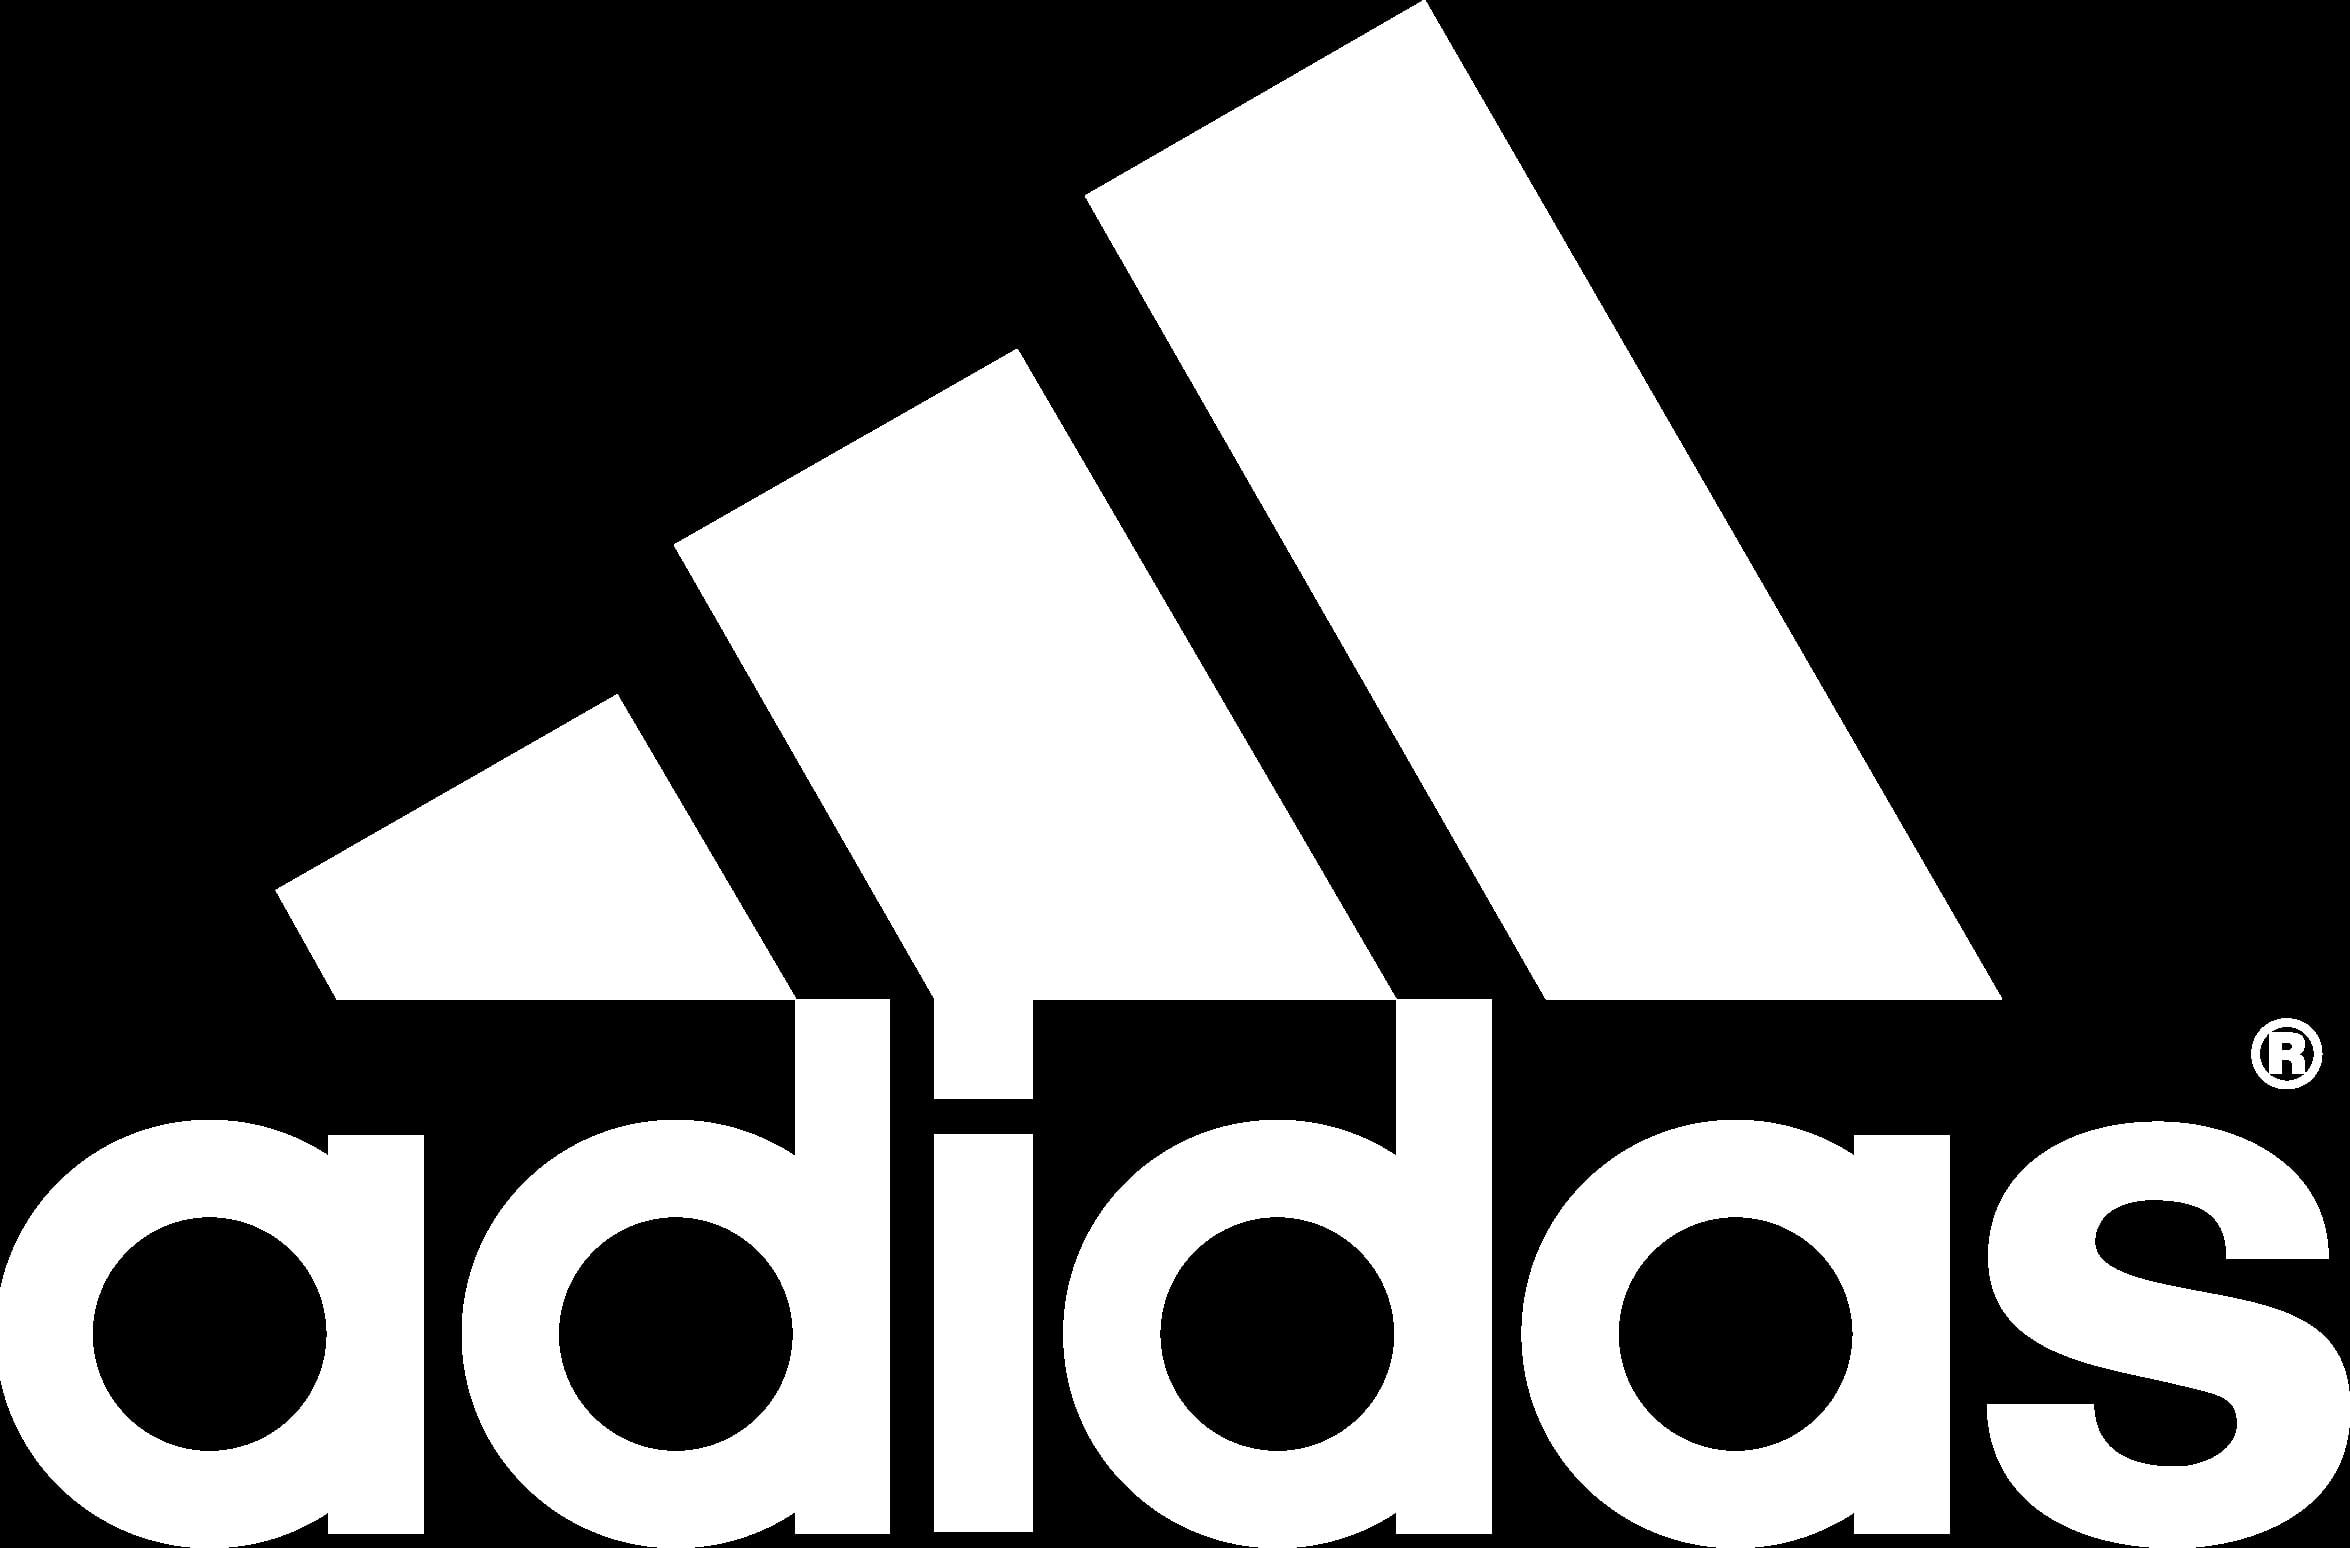 adidas logo images hd Off 70% - rkes.appilogics.info